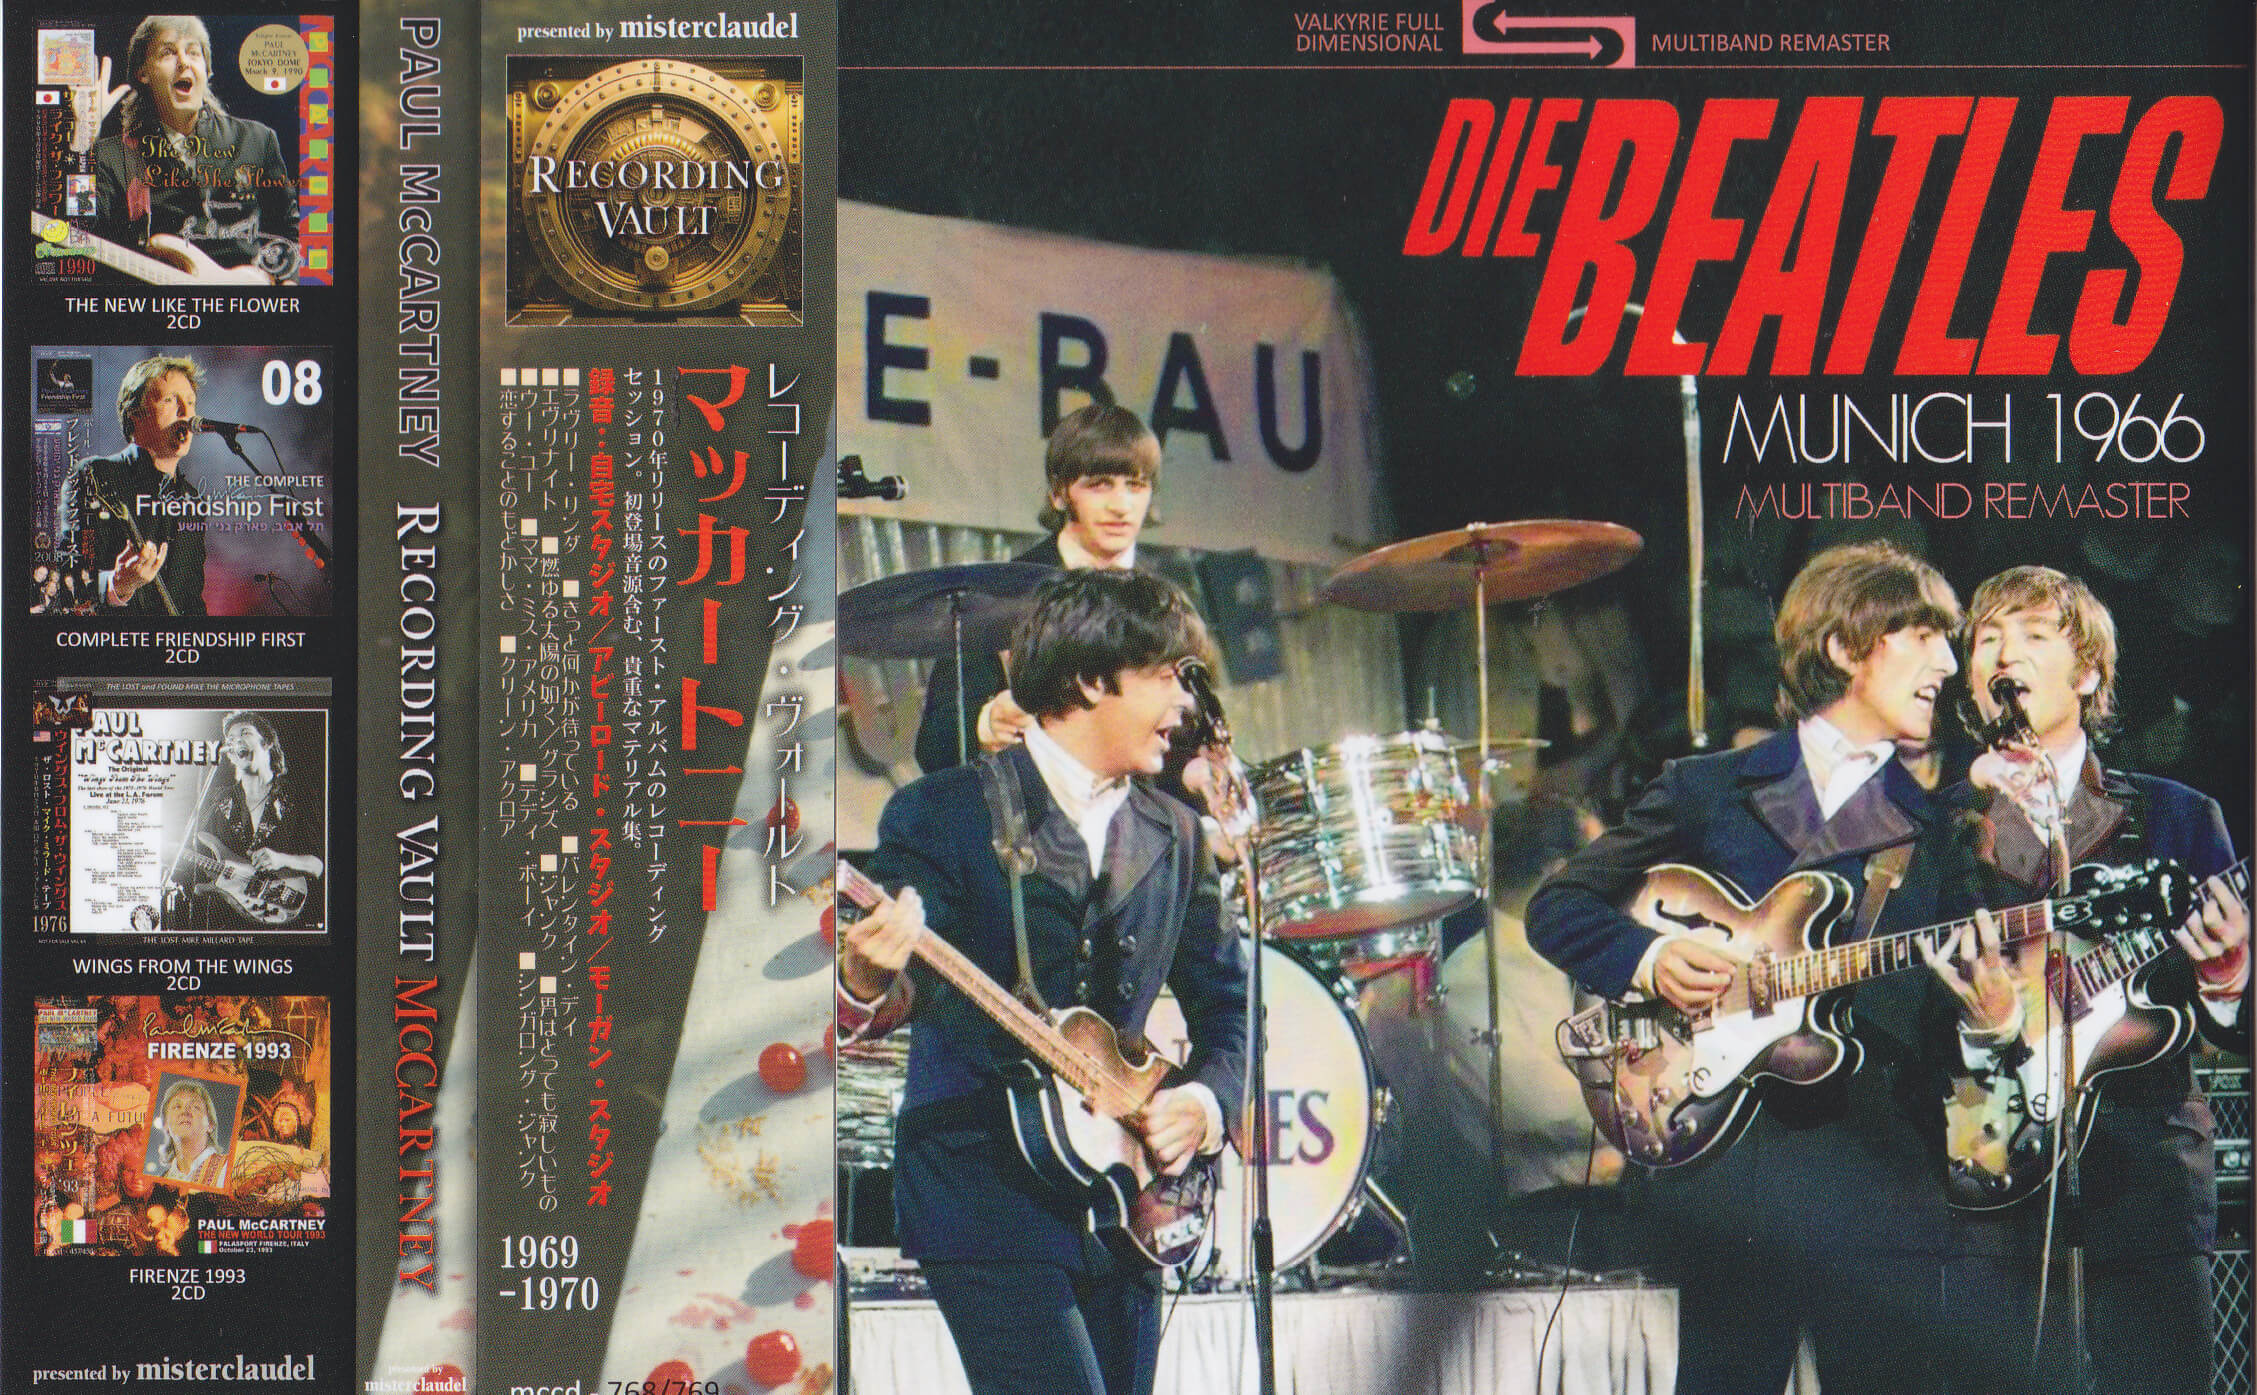 Beatles / Munich 1966 Multiband Remaster / 1CD+1DVD With OBI Strip ...